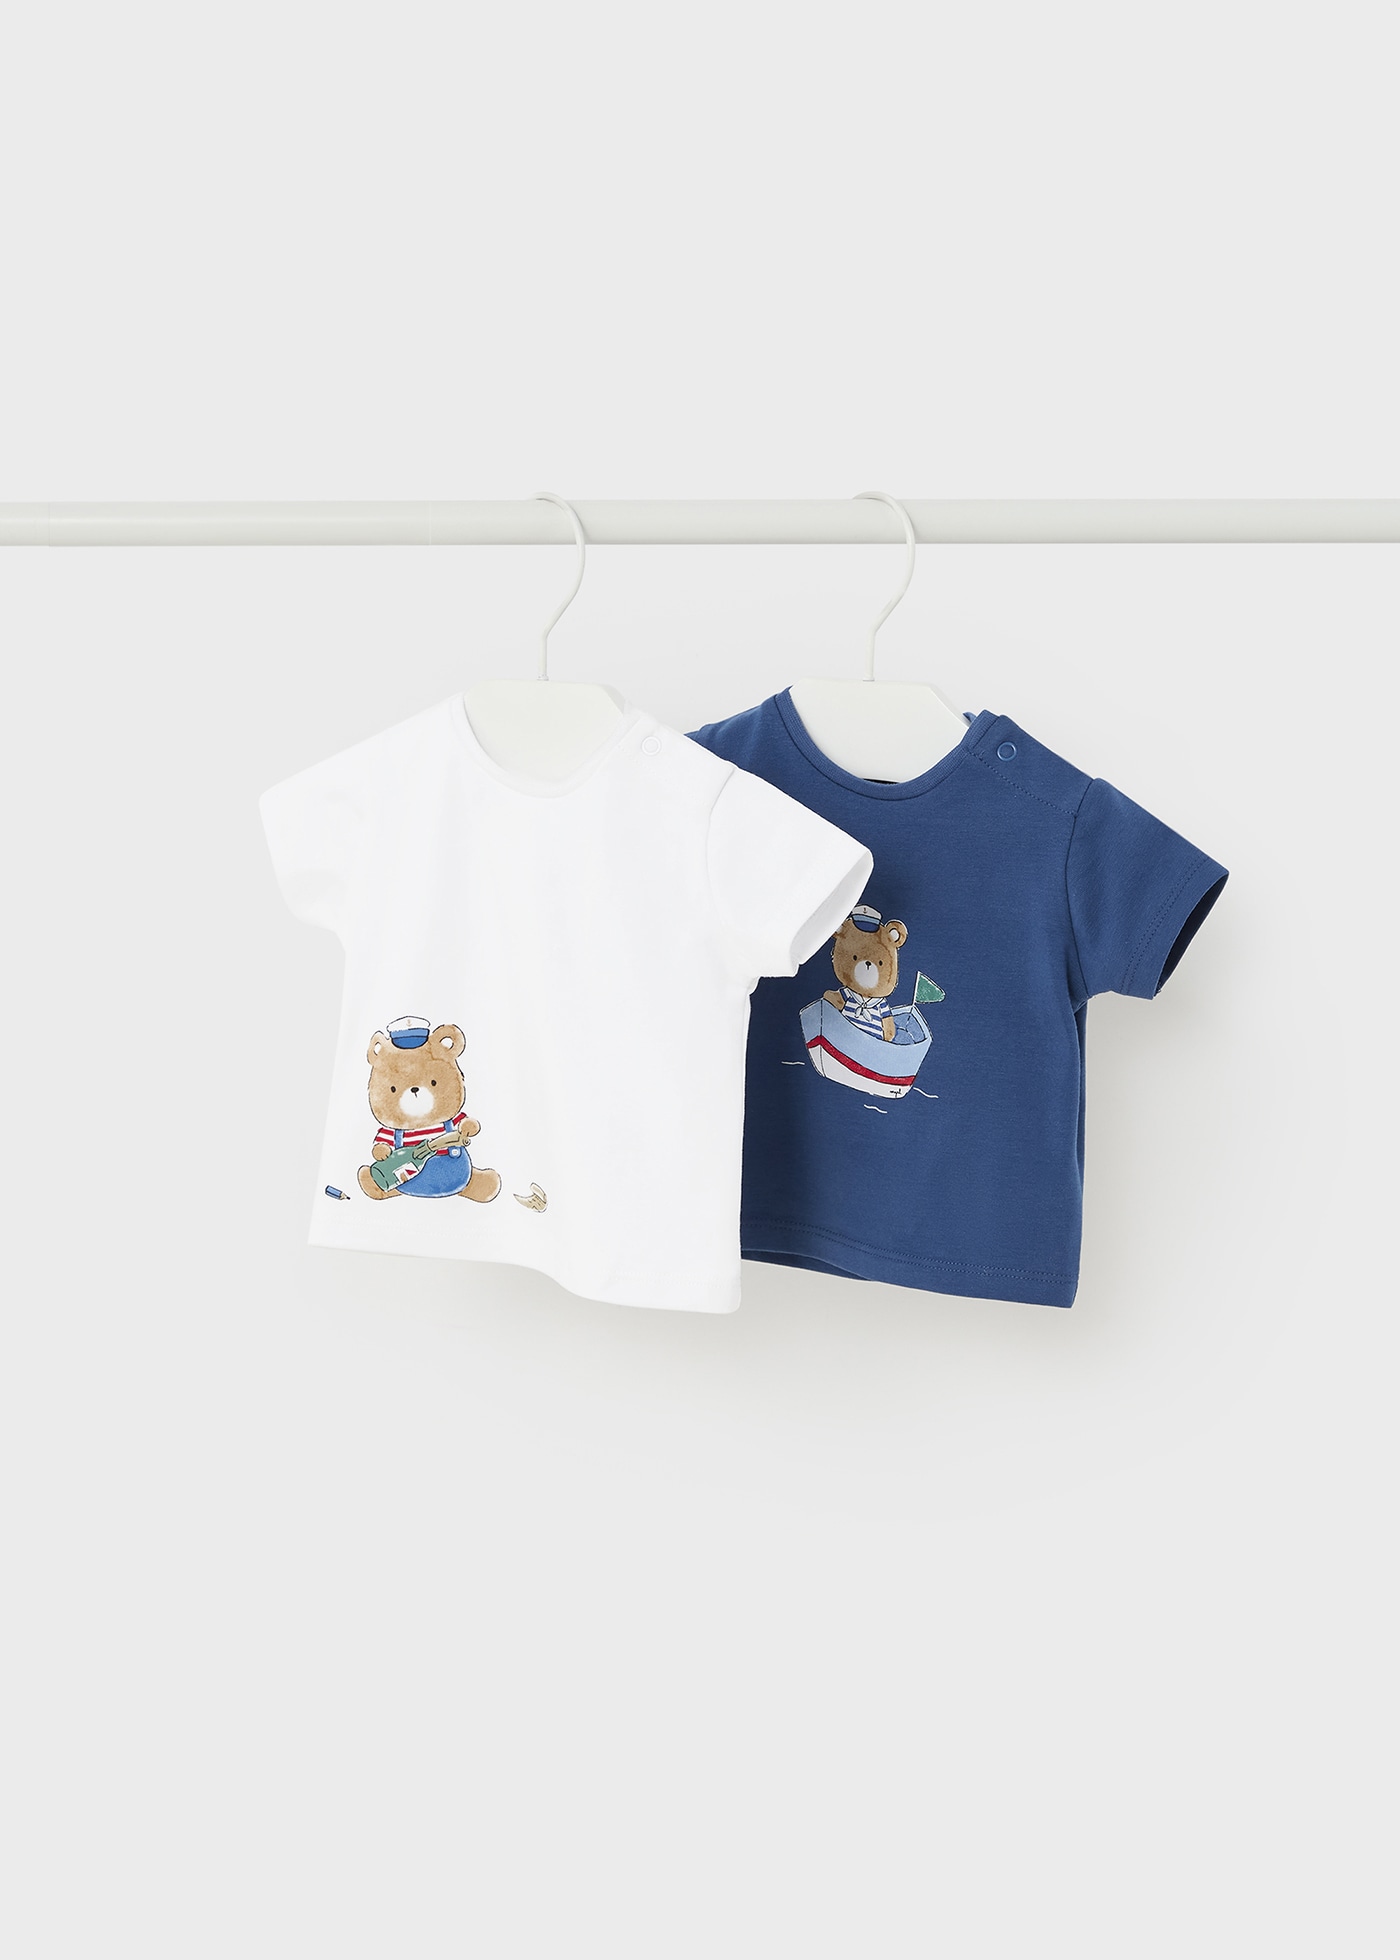 Newborn Set of 2 Printed T-Shirts Better Cotton